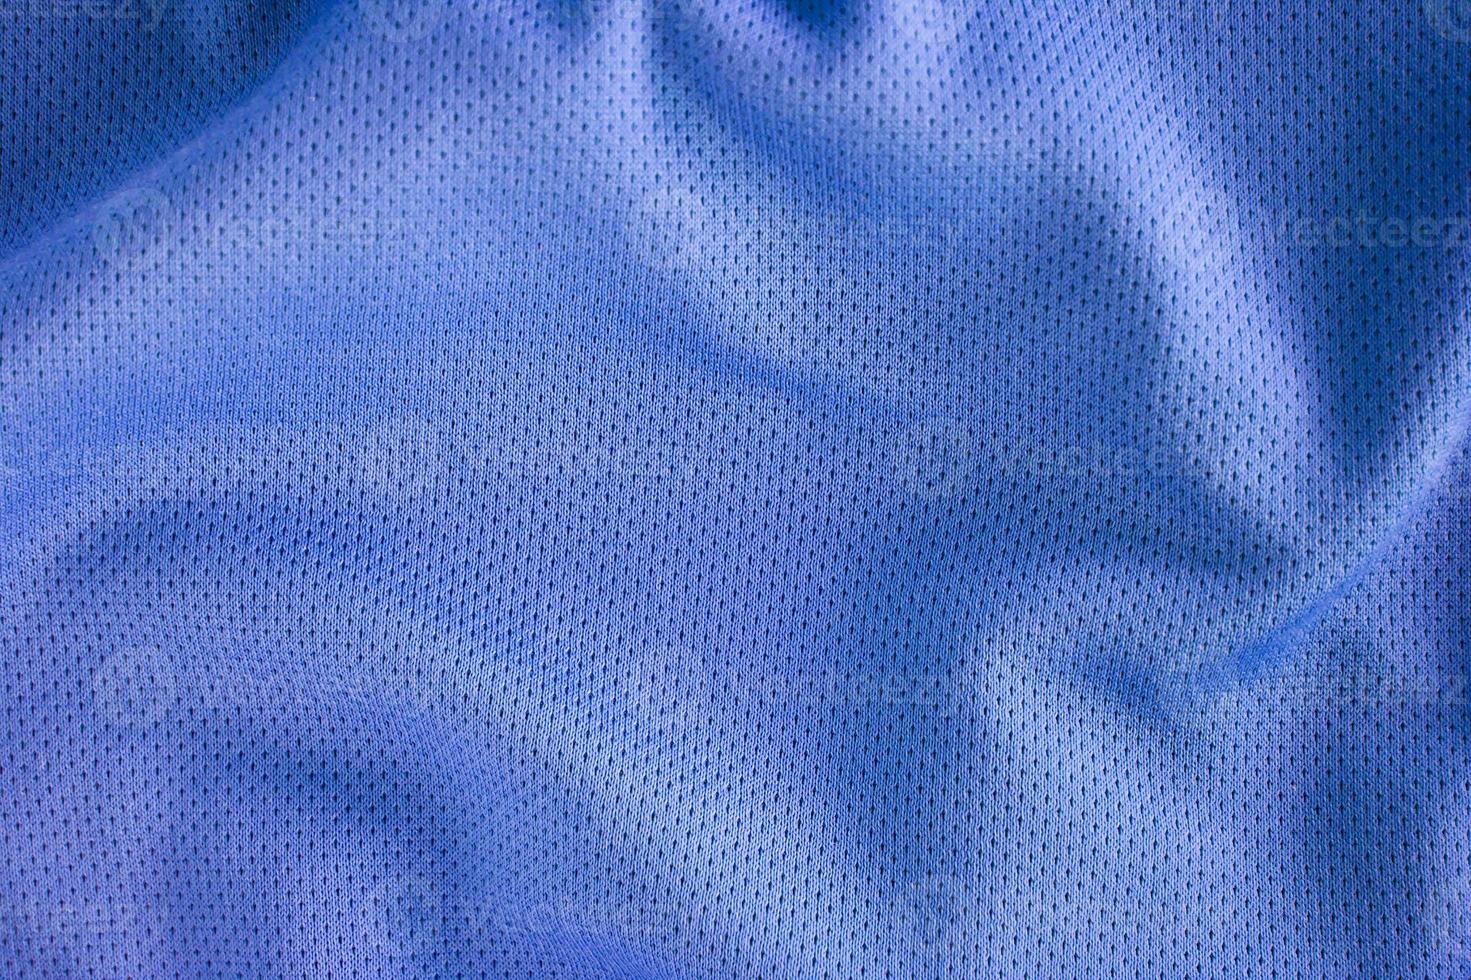 sportkläder tyg textur bakgrund, ovanifrån av tyg textil yta foto